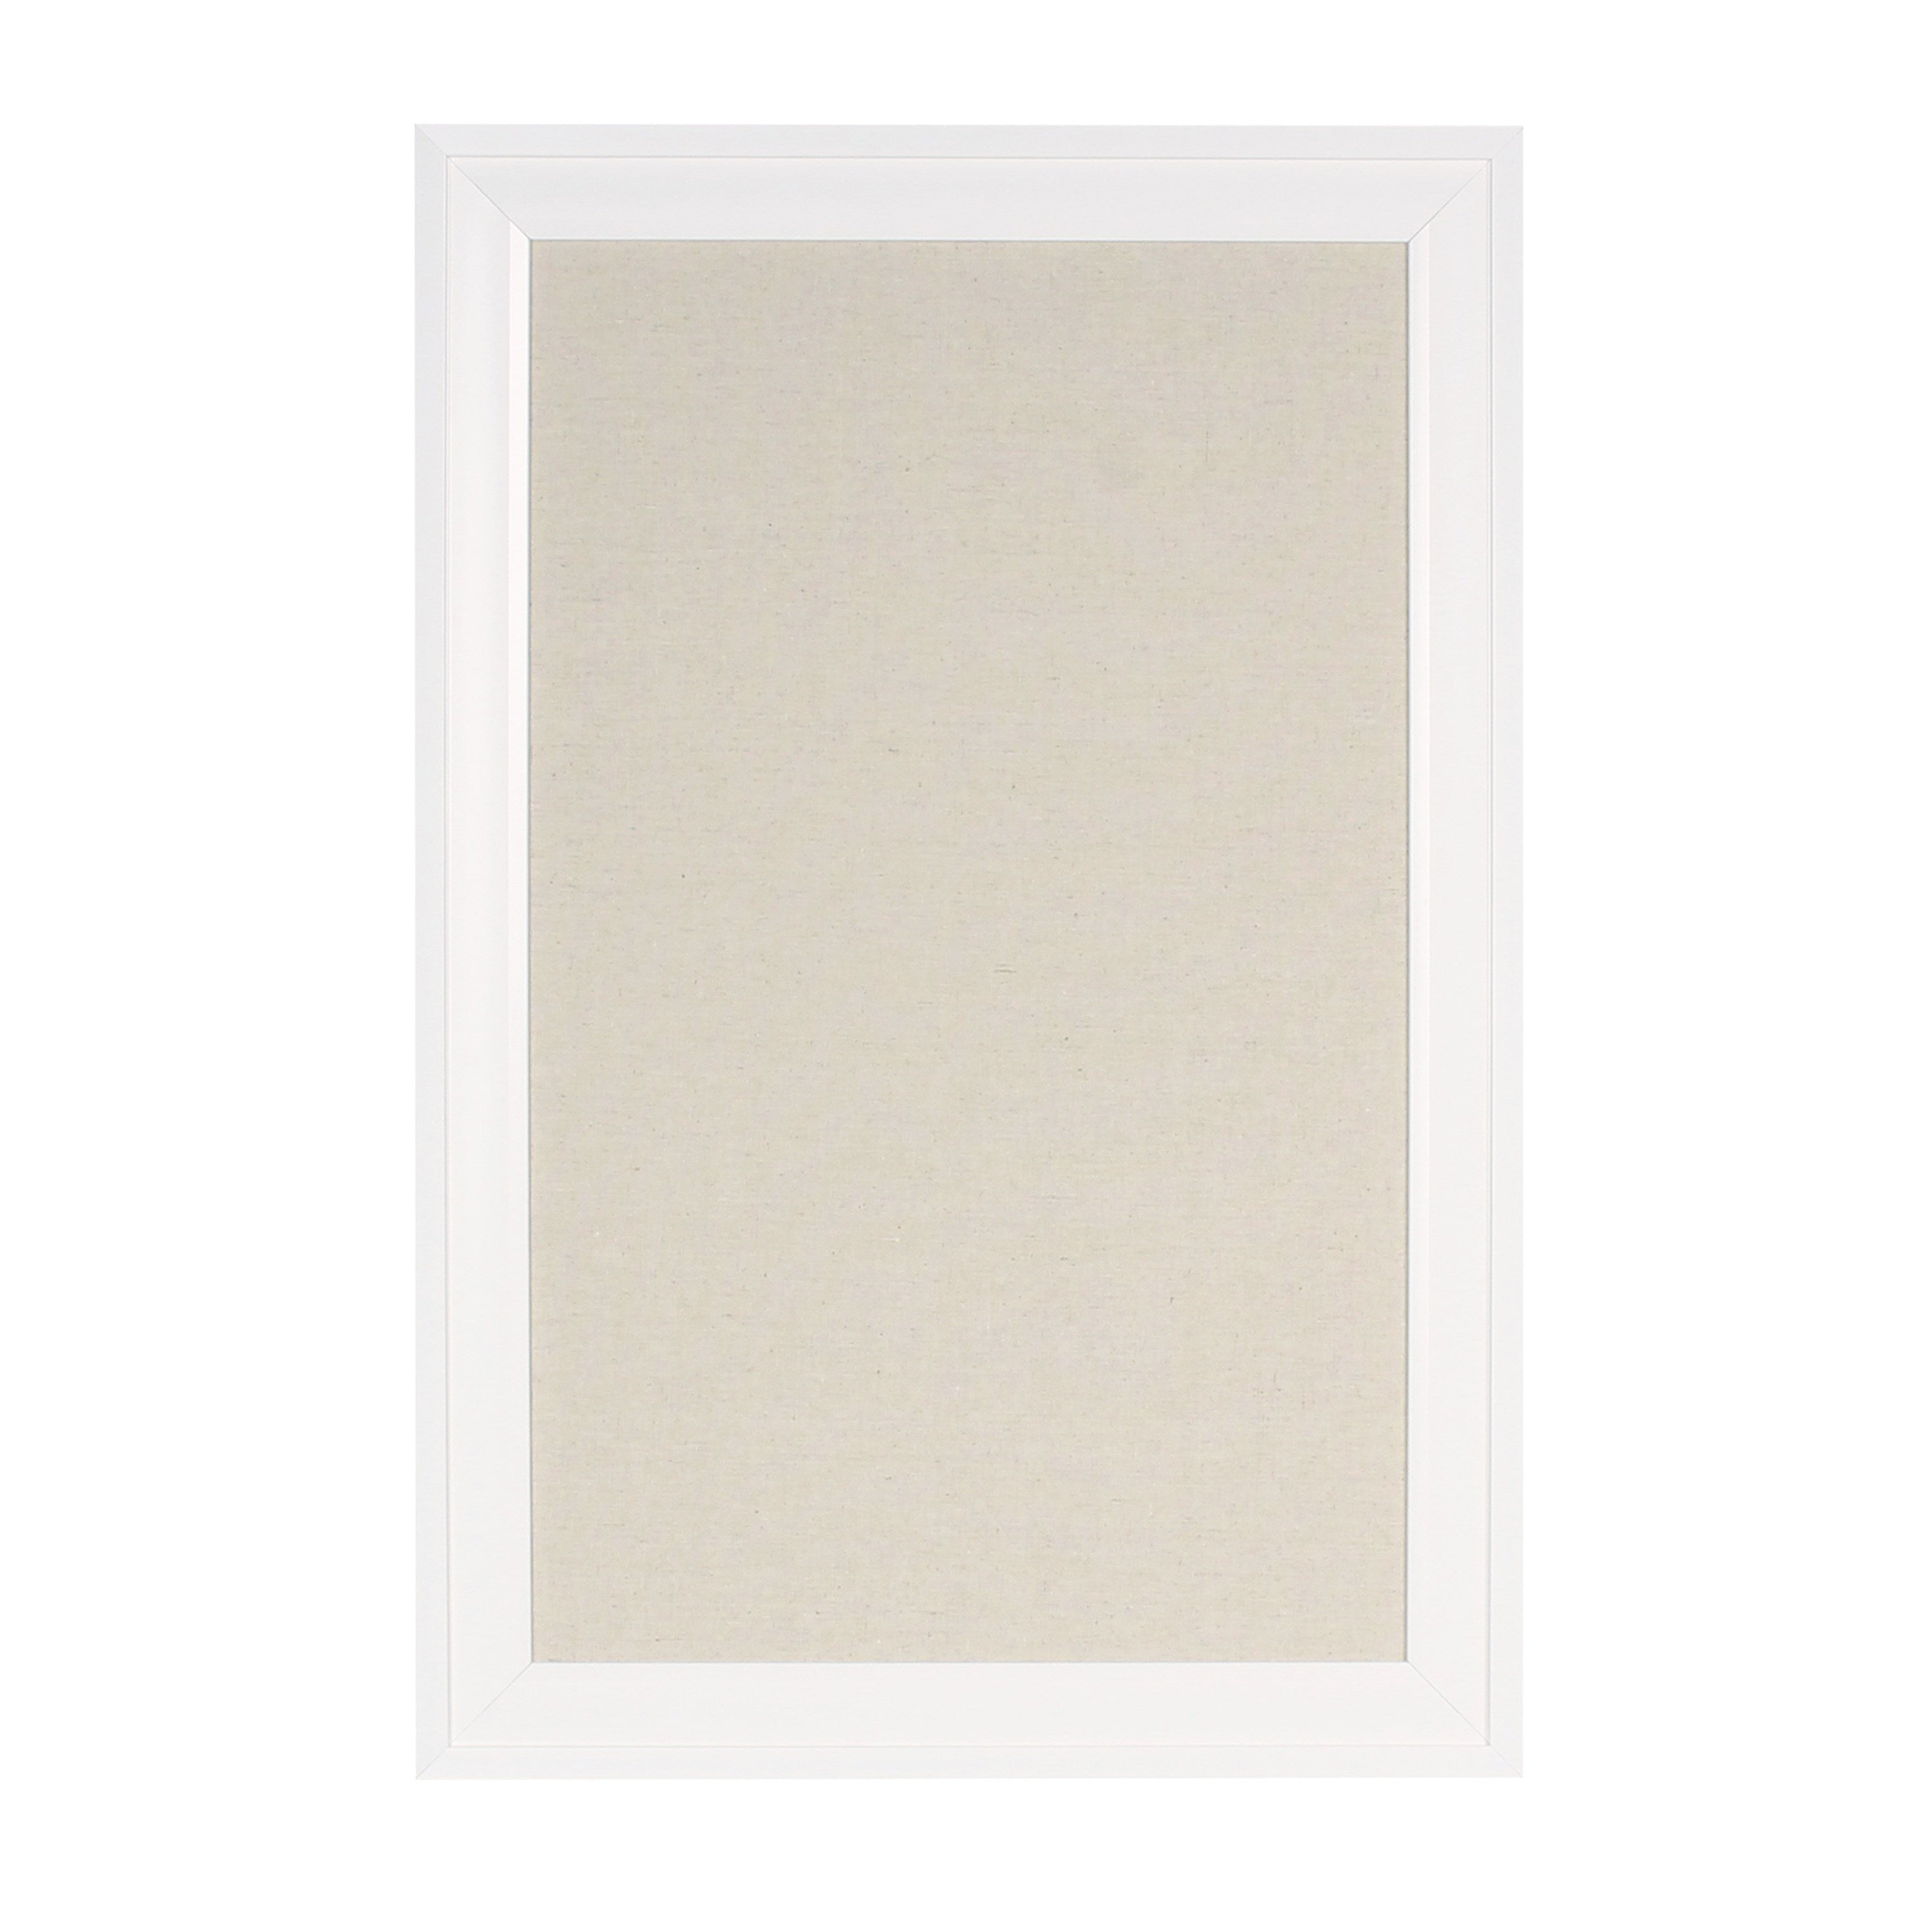 Bosc Framed Linen Fabric Pinboard